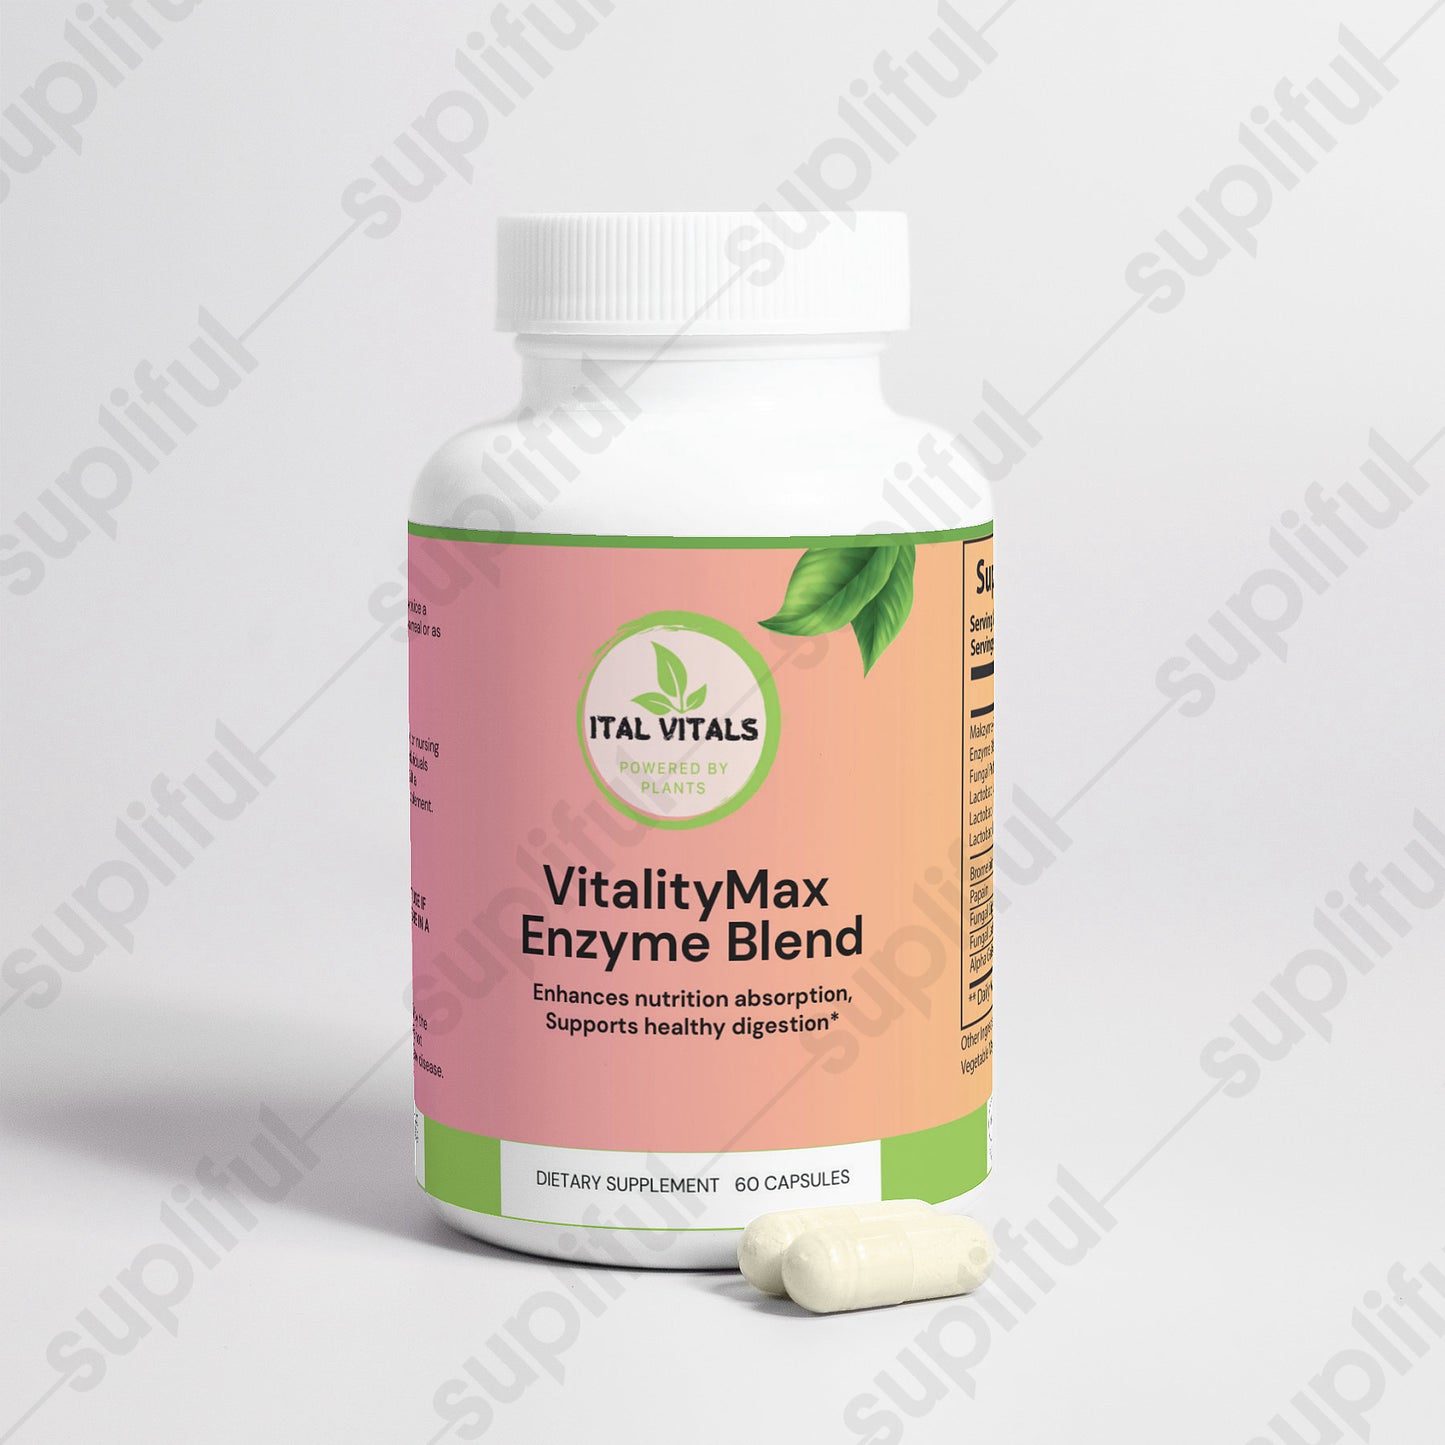 VitalityMax Enzyme Blend